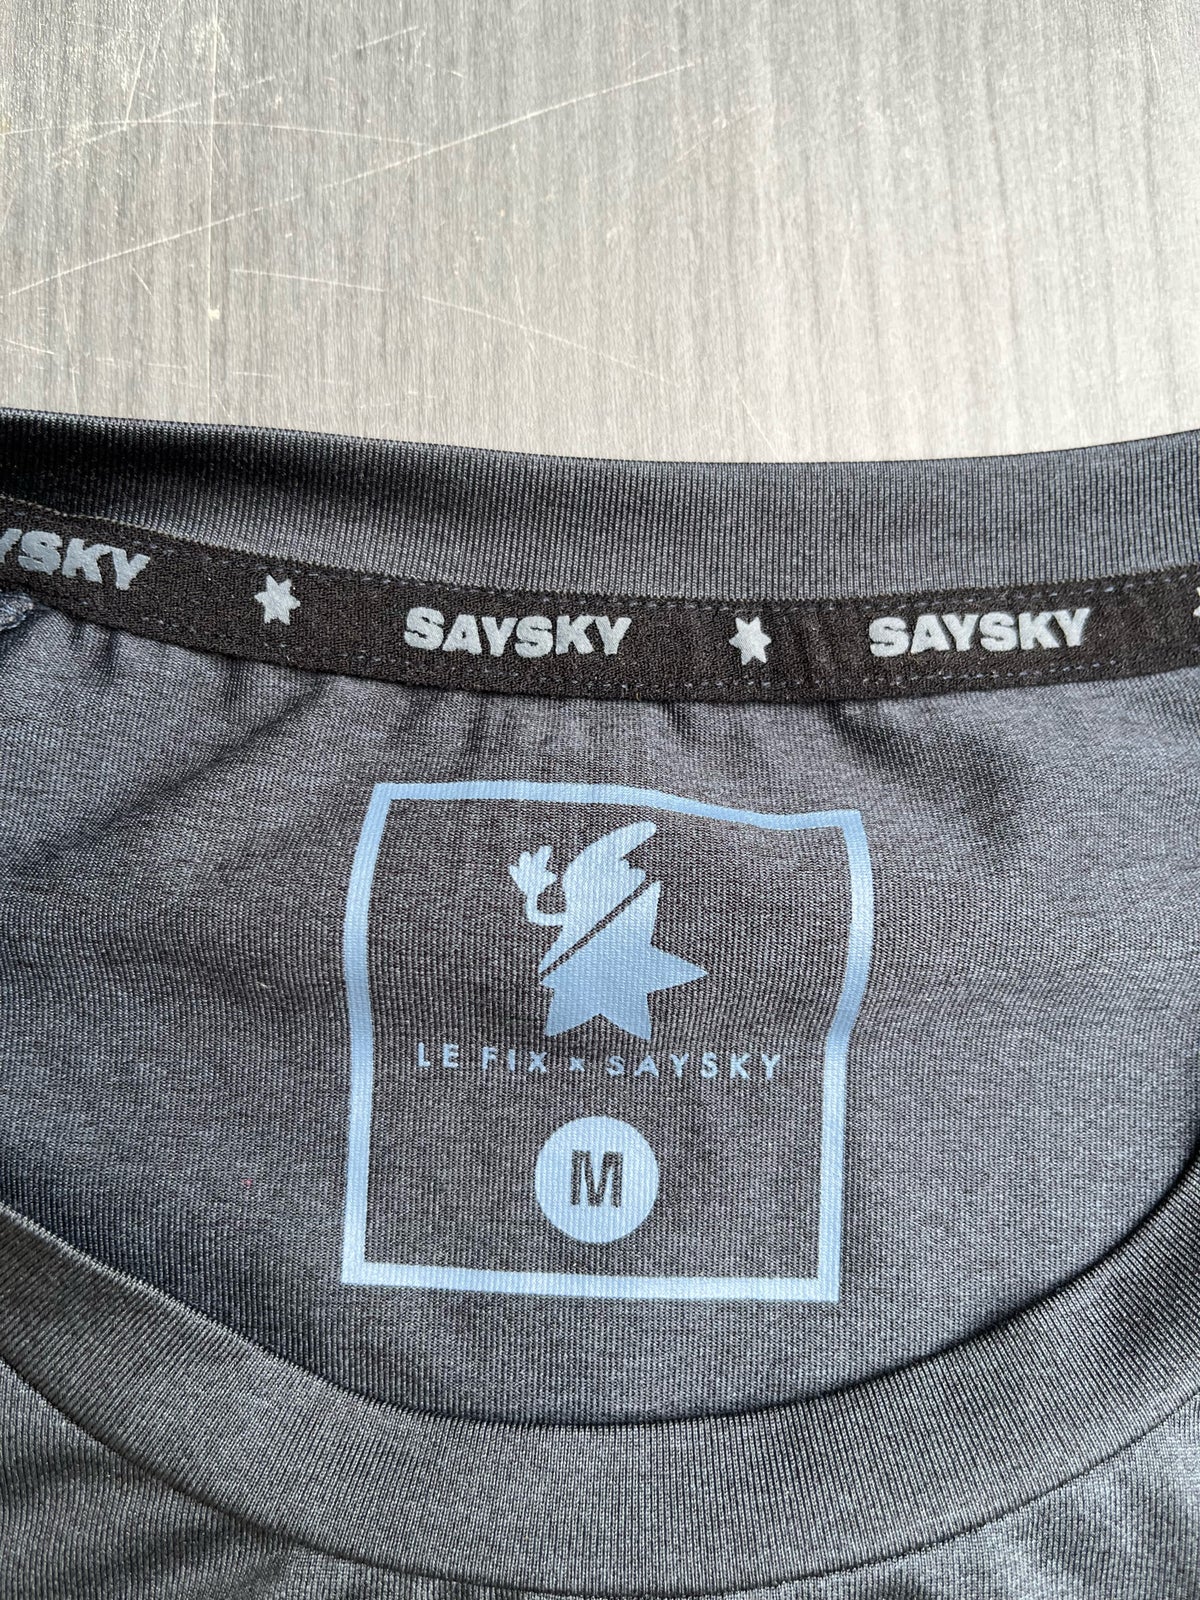 T-shirt, Le Fix x Saysky, str. M